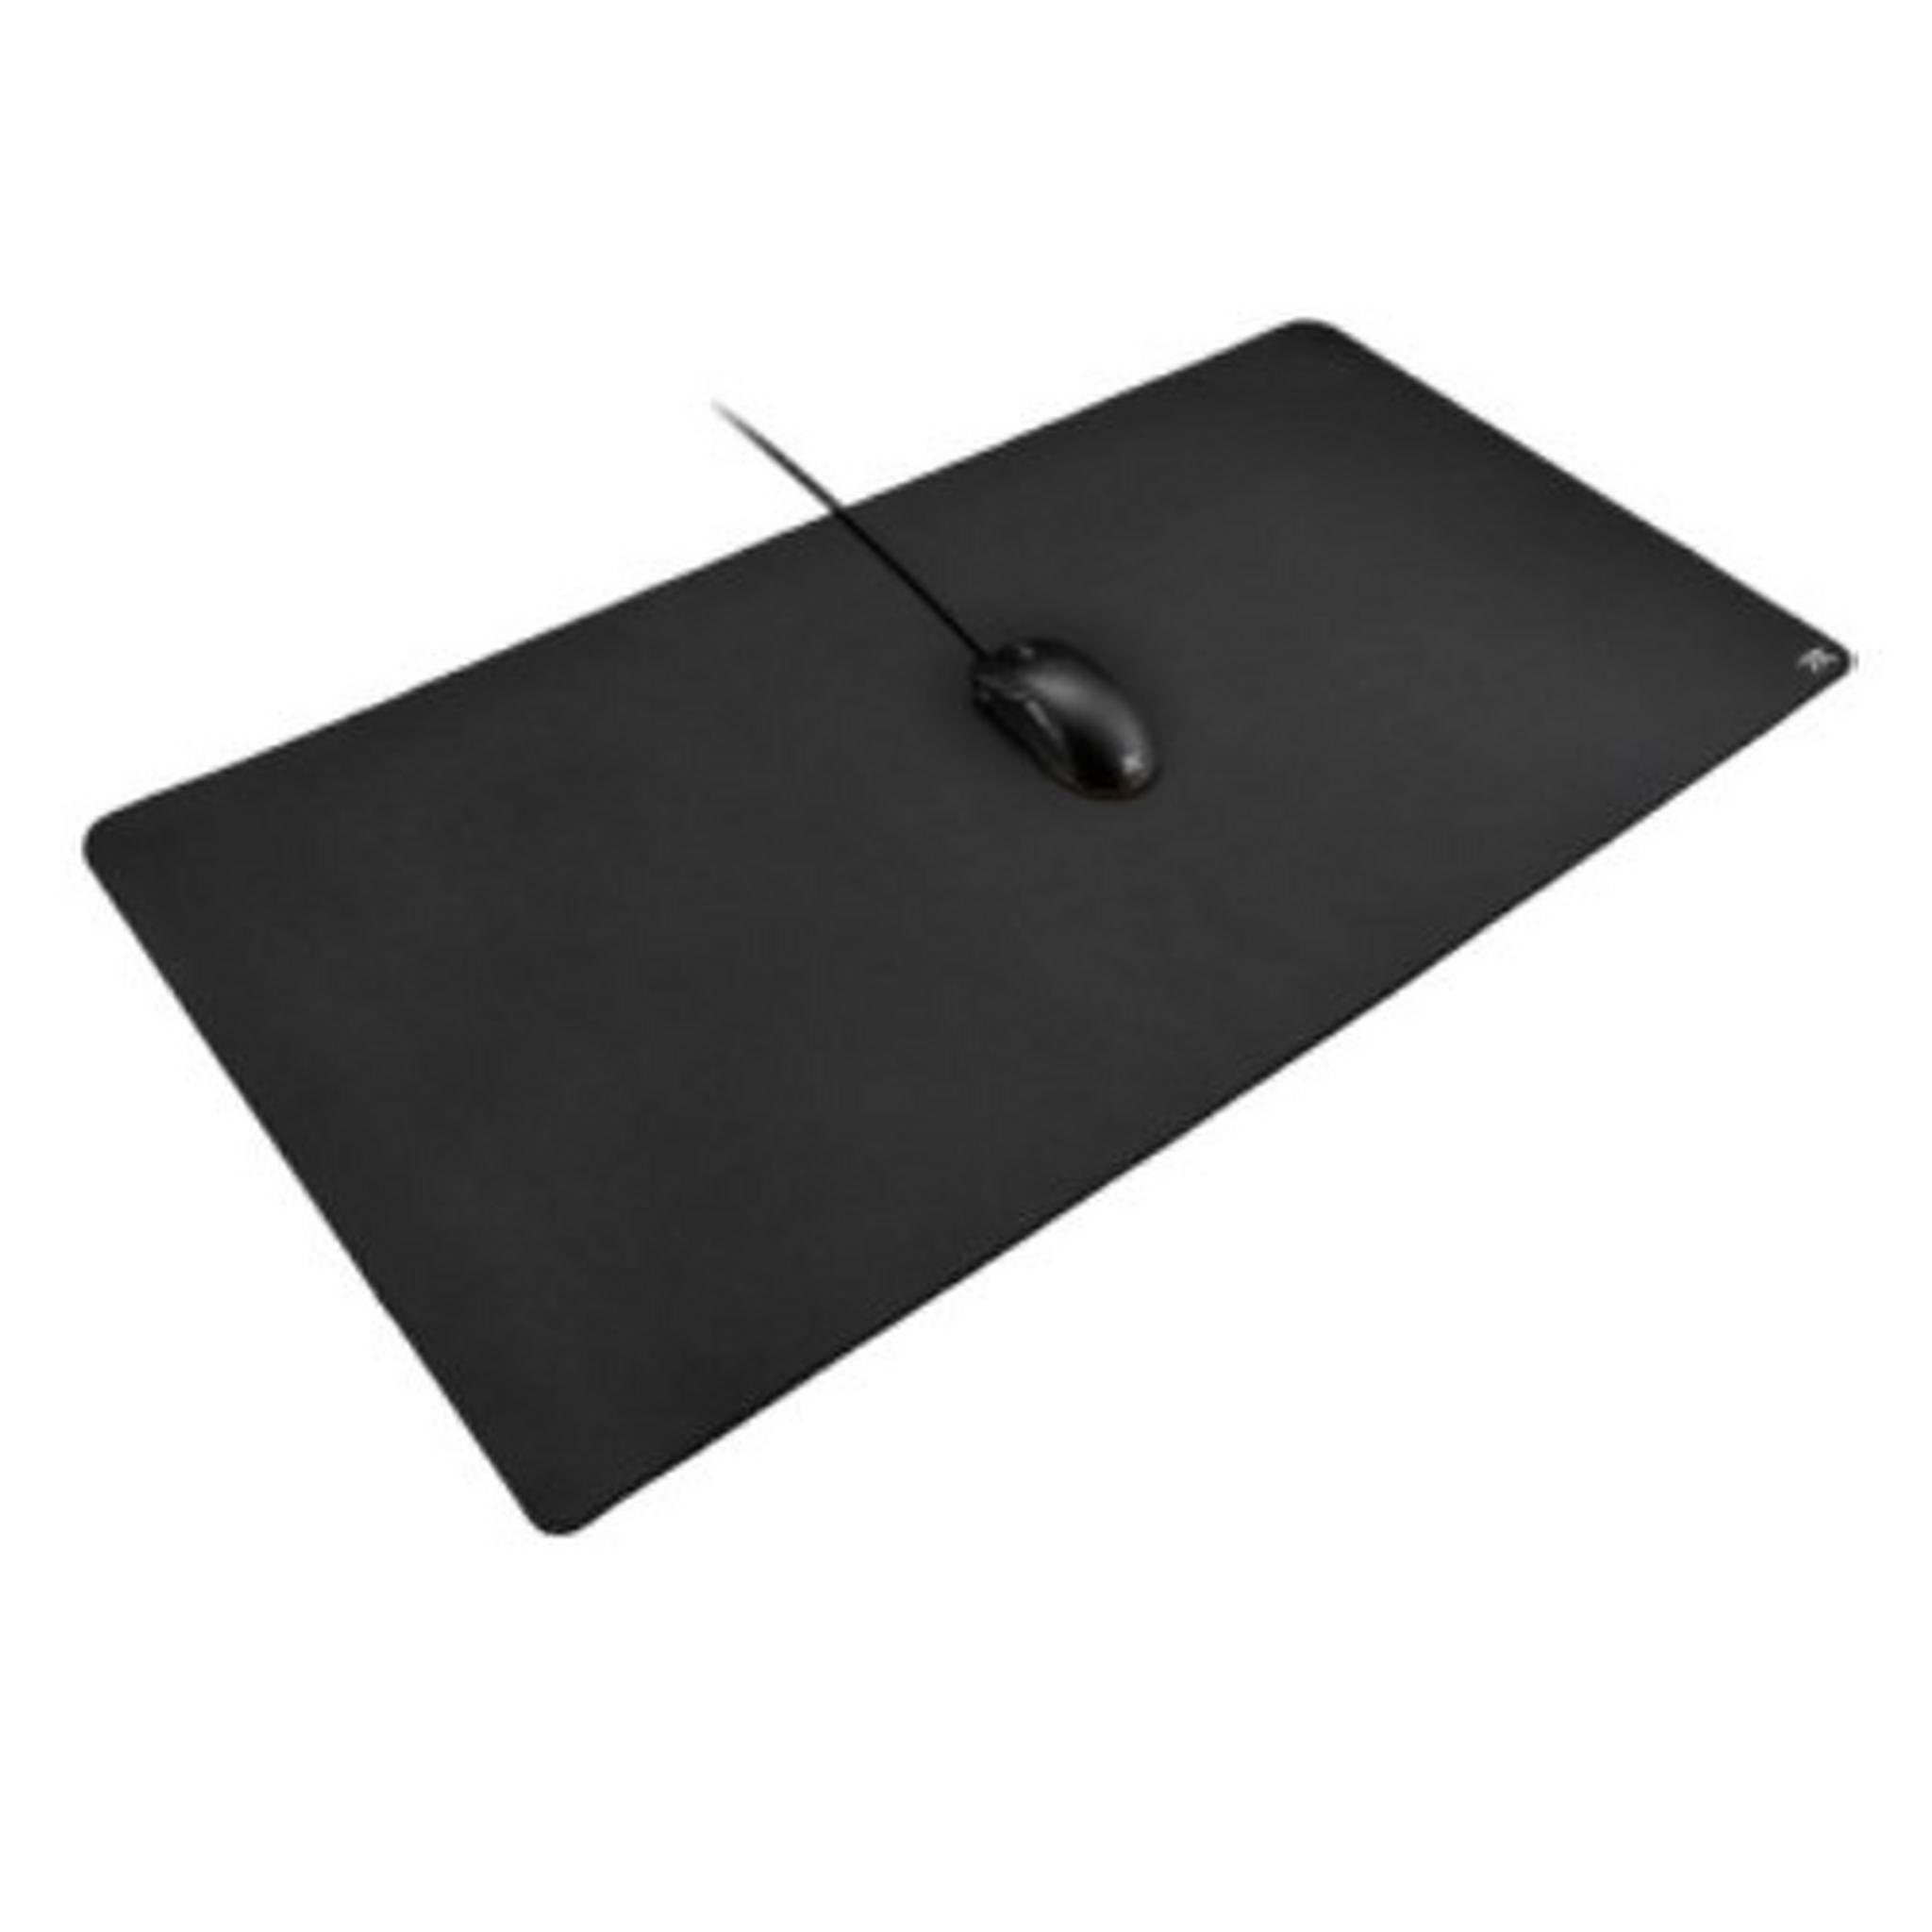 Fnatic Dash Gaming Mouse Pad - XL Desk